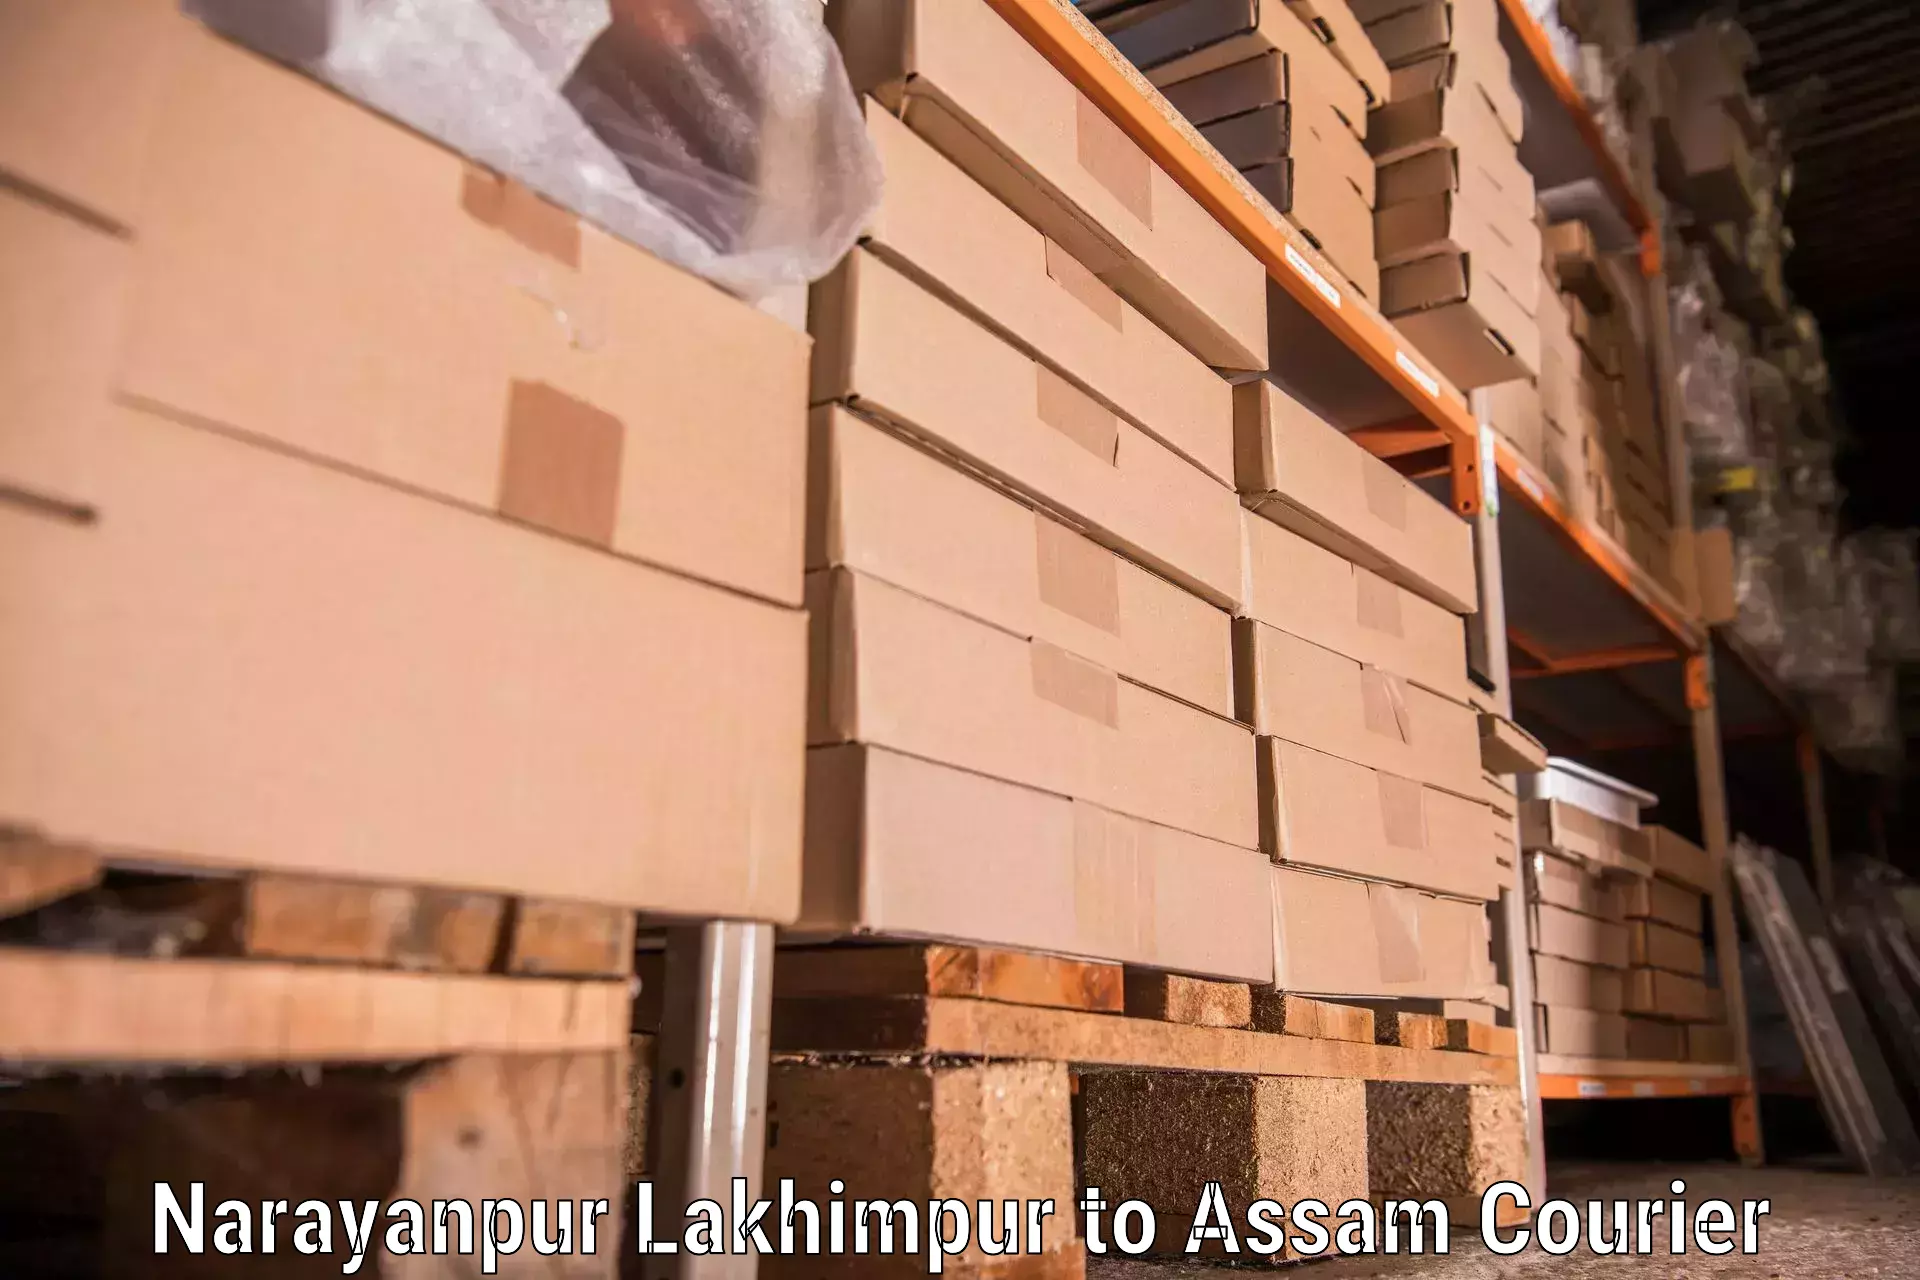 Furniture delivery service Narayanpur Lakhimpur to Dalgaon